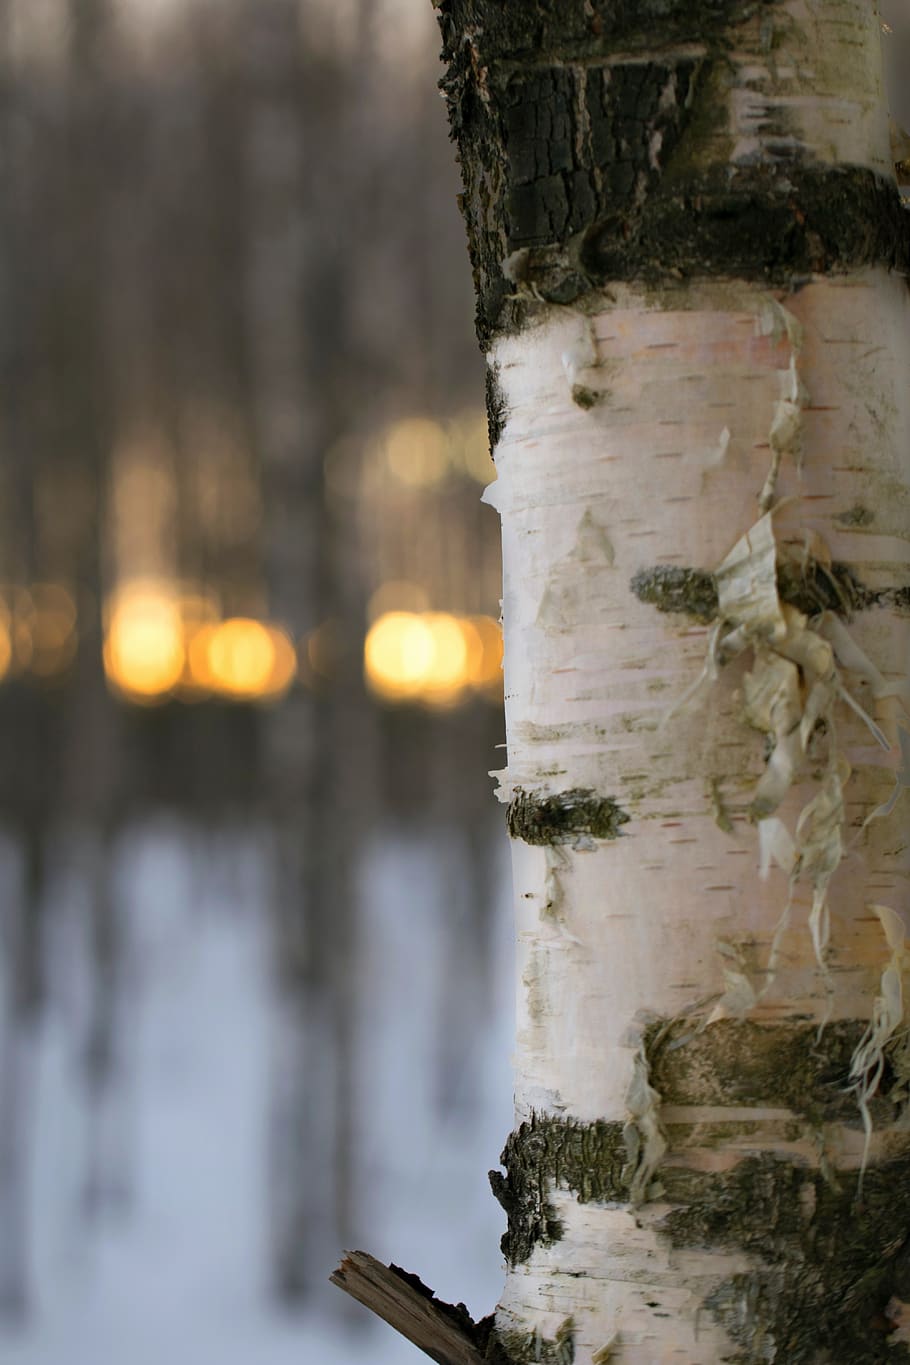 al aire libre, árbol, madera, naturaleza, invierno, la naturaleza finlandesa, foto de naturaleza, nieve, abedul, tarde